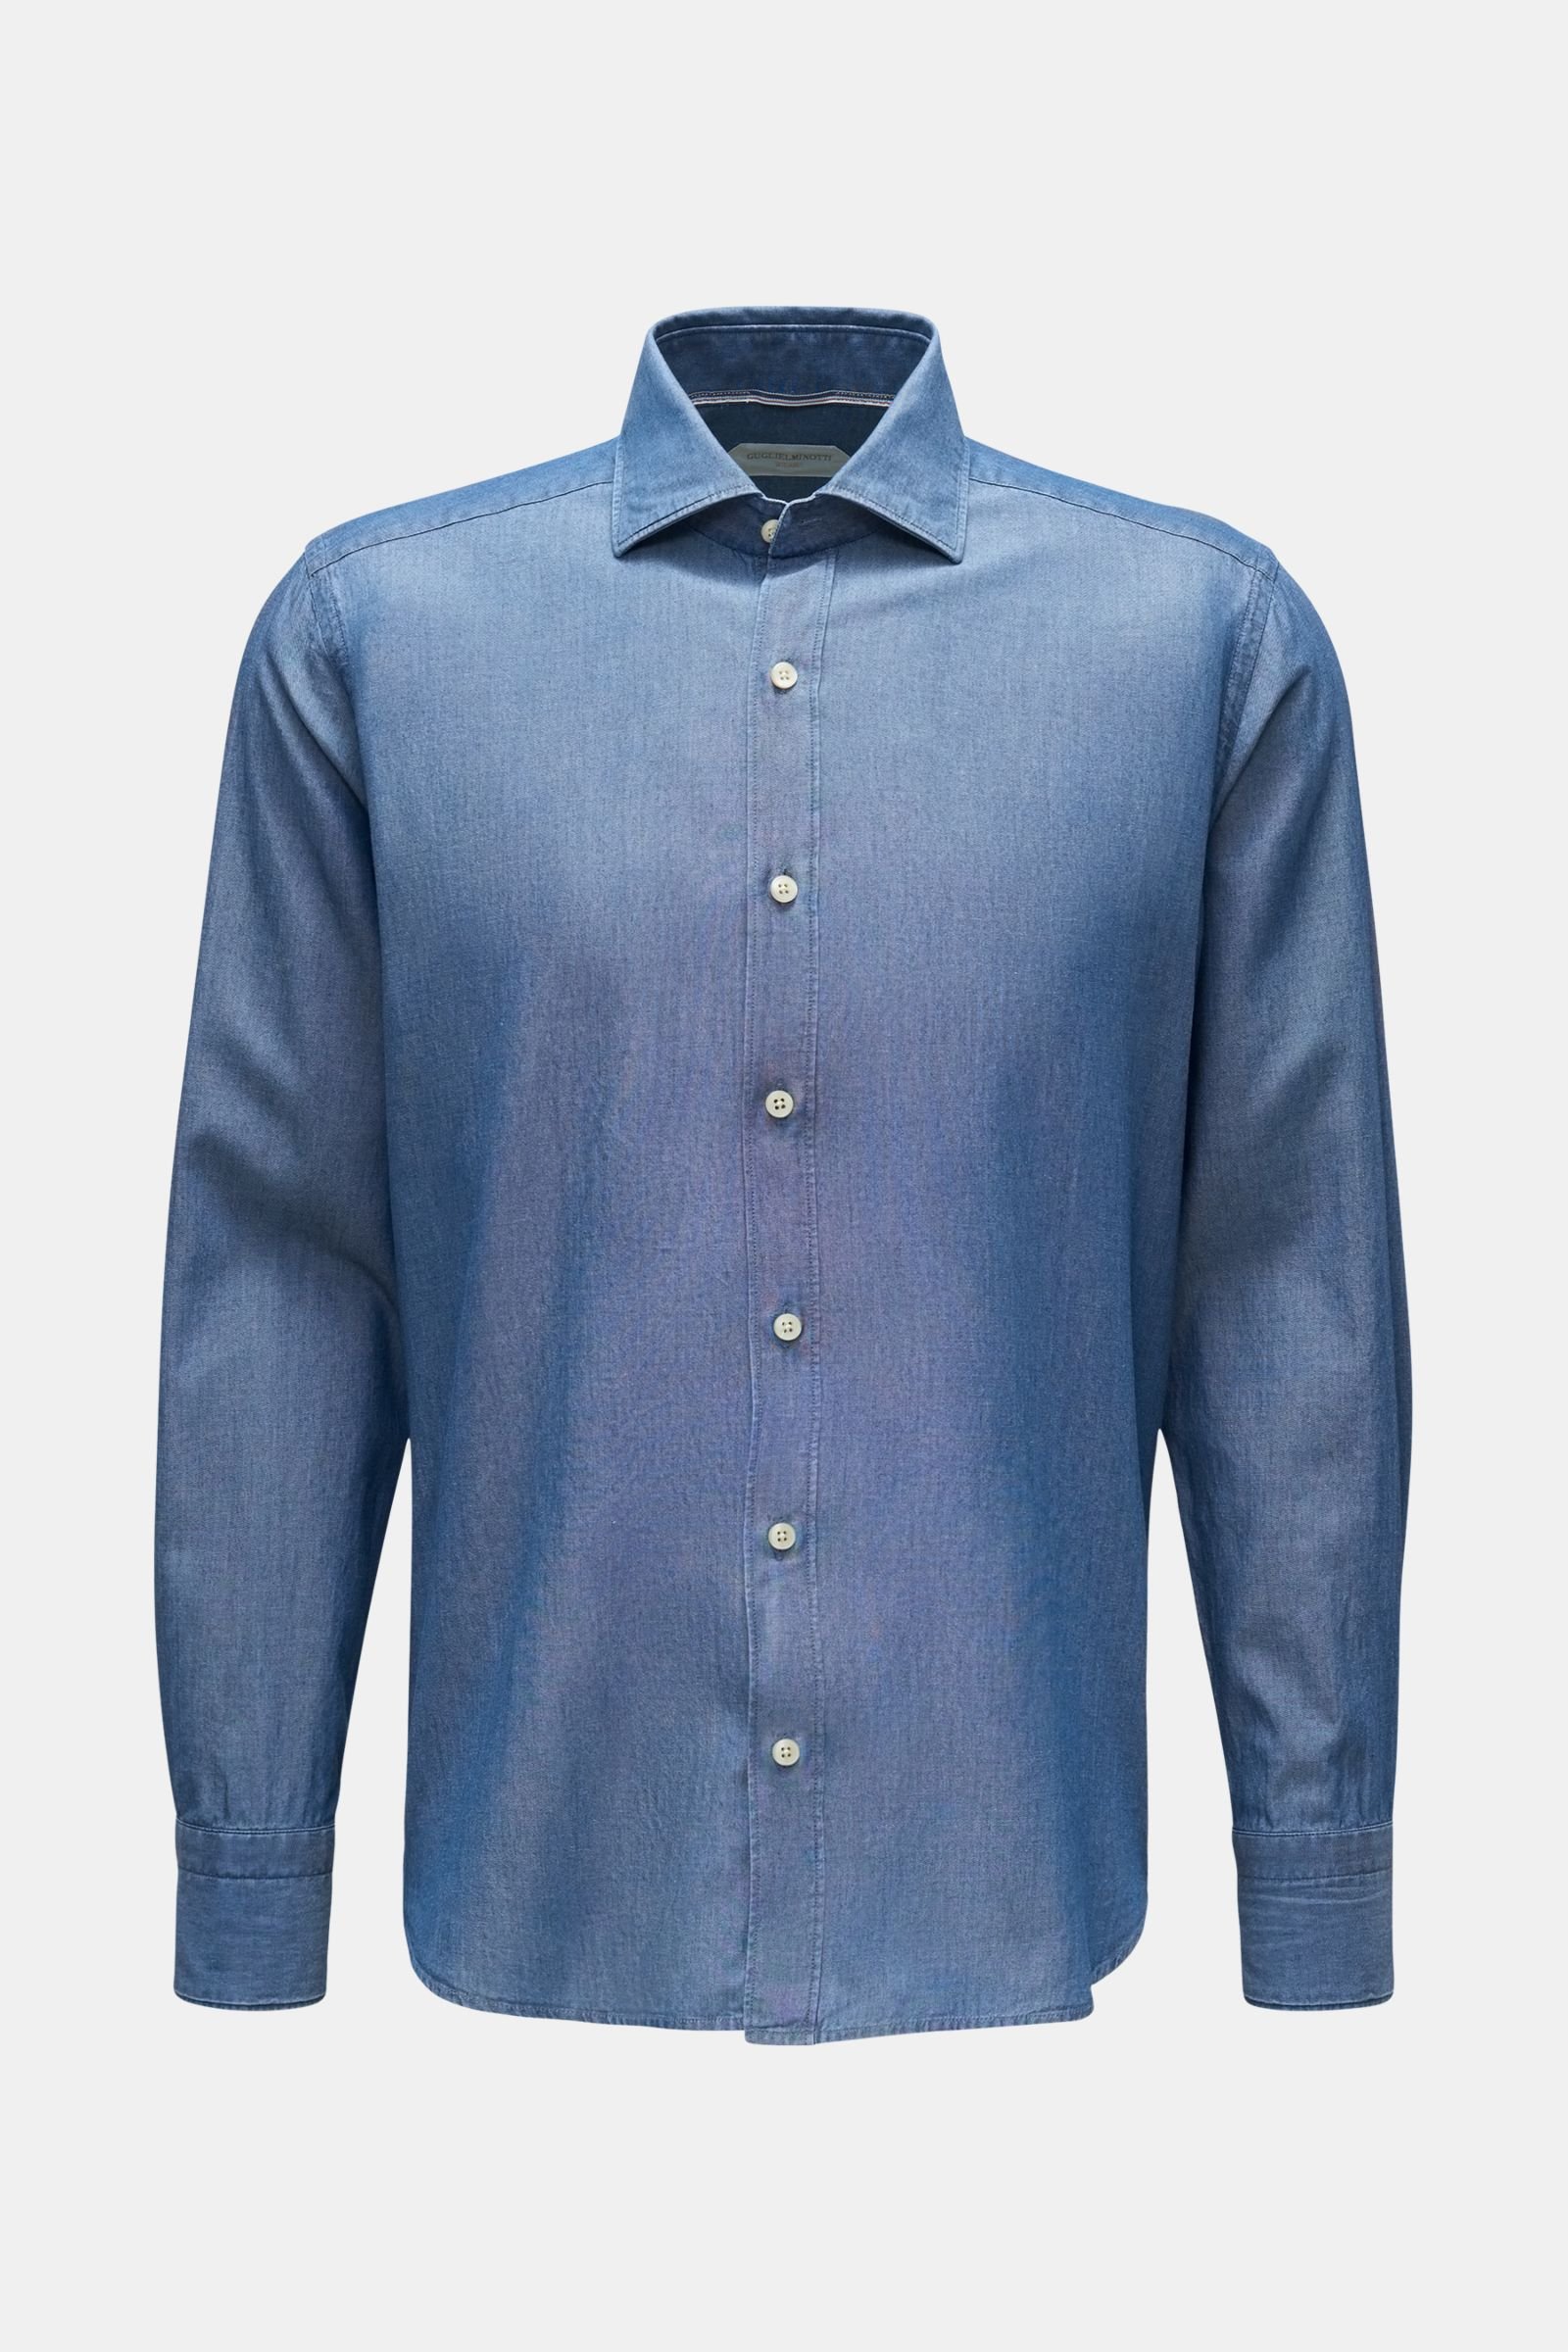 Chambray shirt shark collar smoky blue